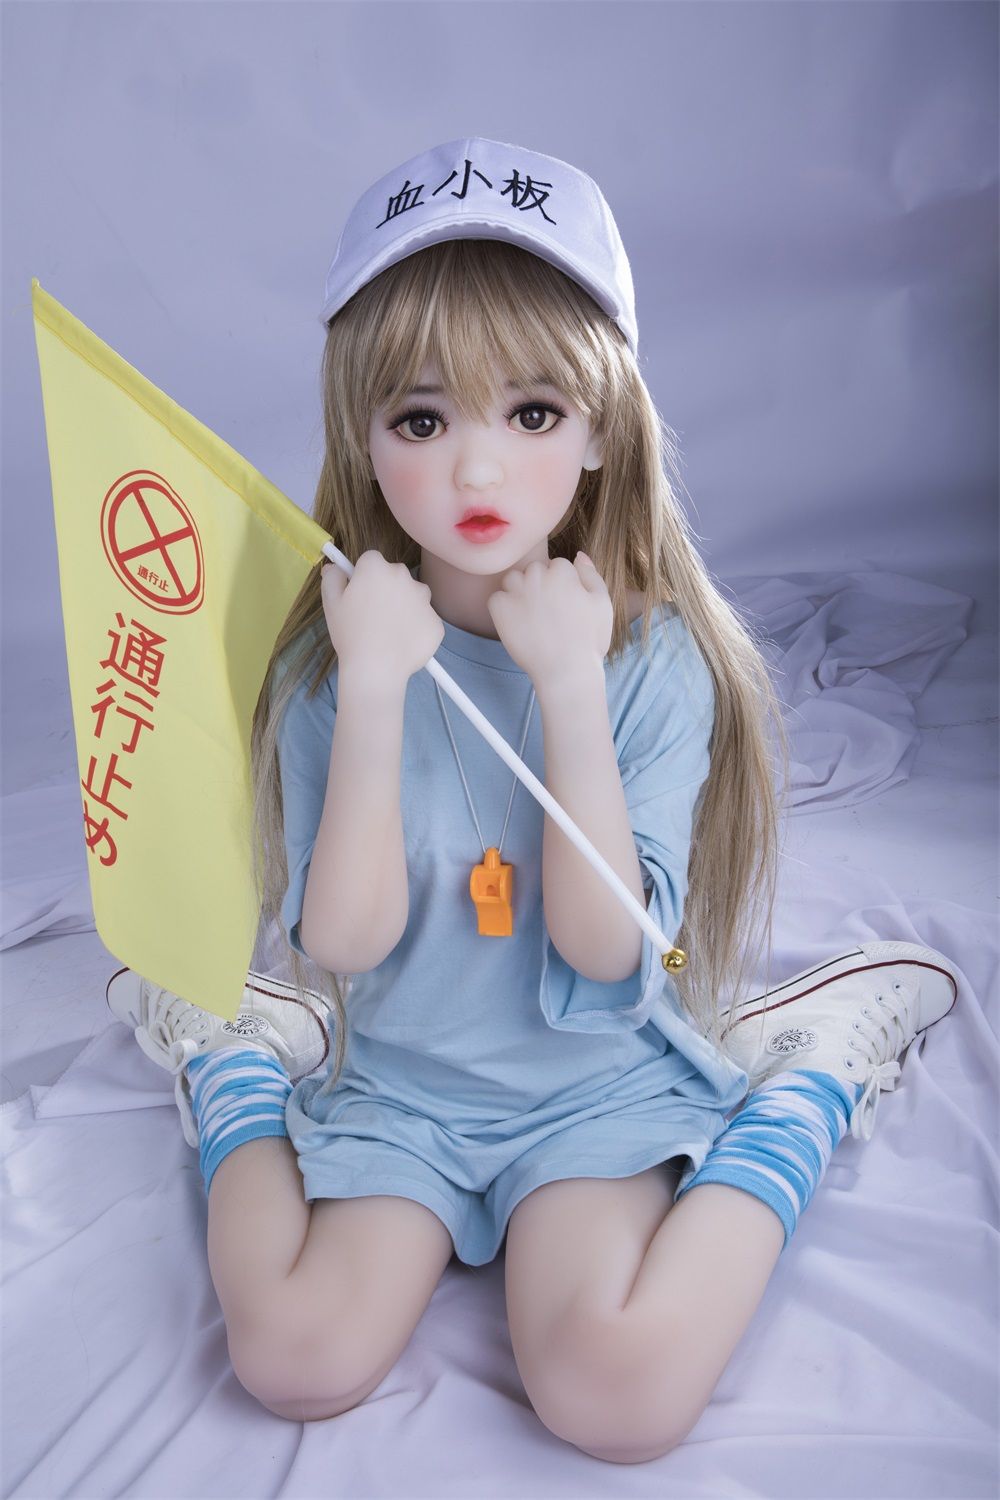 Japanese Sex Dolls  Realsexdollstorecom - Texas - El Paso ID1554417